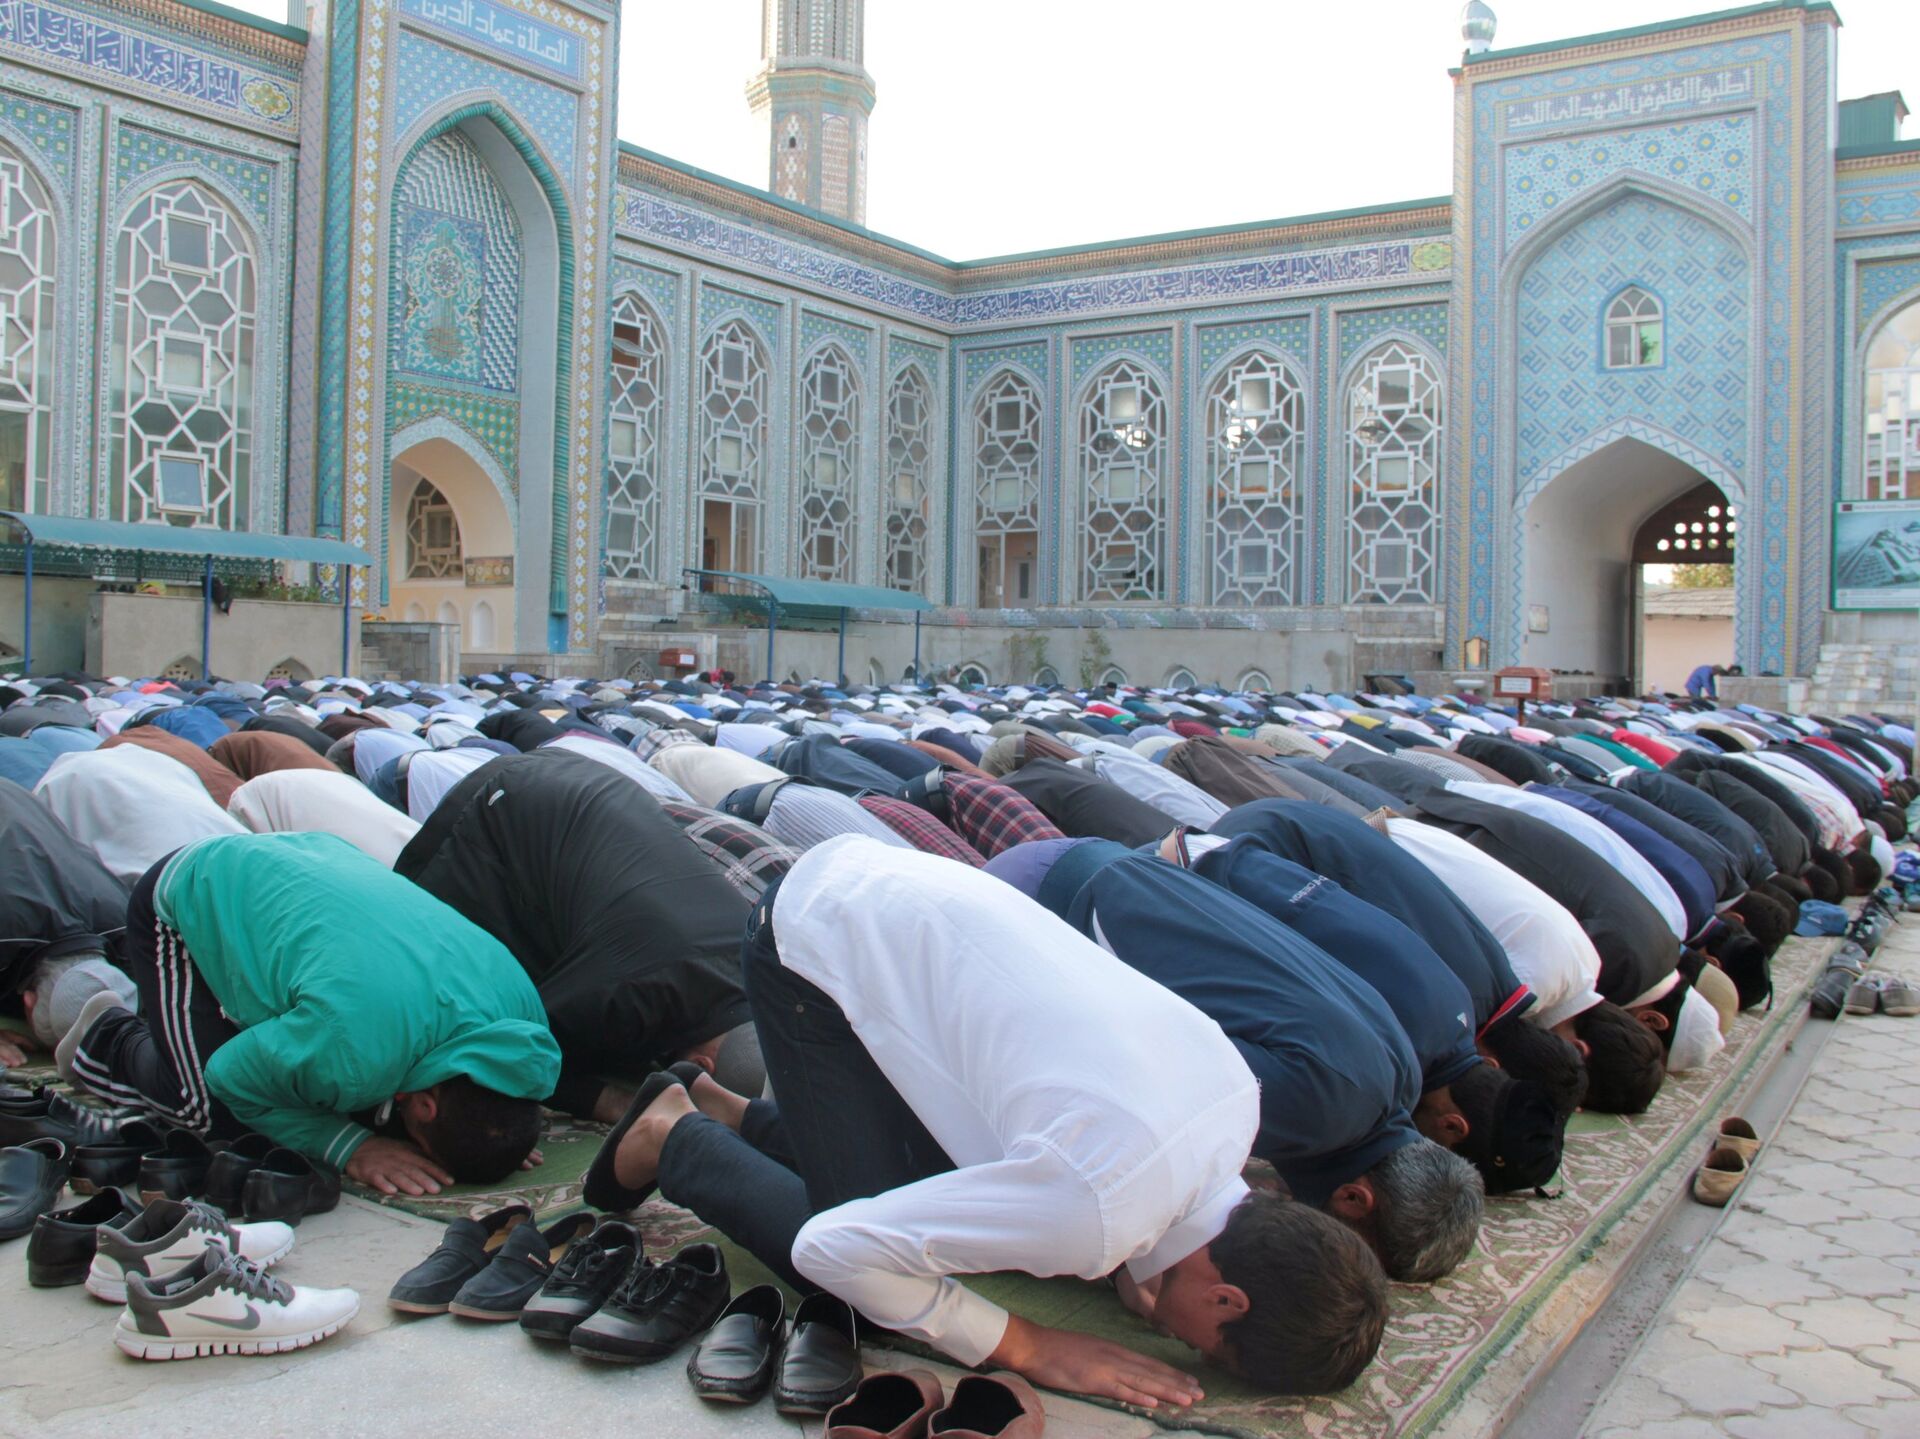 Таджики кто по религии. Мечеть Джума намаз в Таджикистане. Джума намаз в мечети. Курбан байрам в Таджикистане. Мусульмане в мечети.